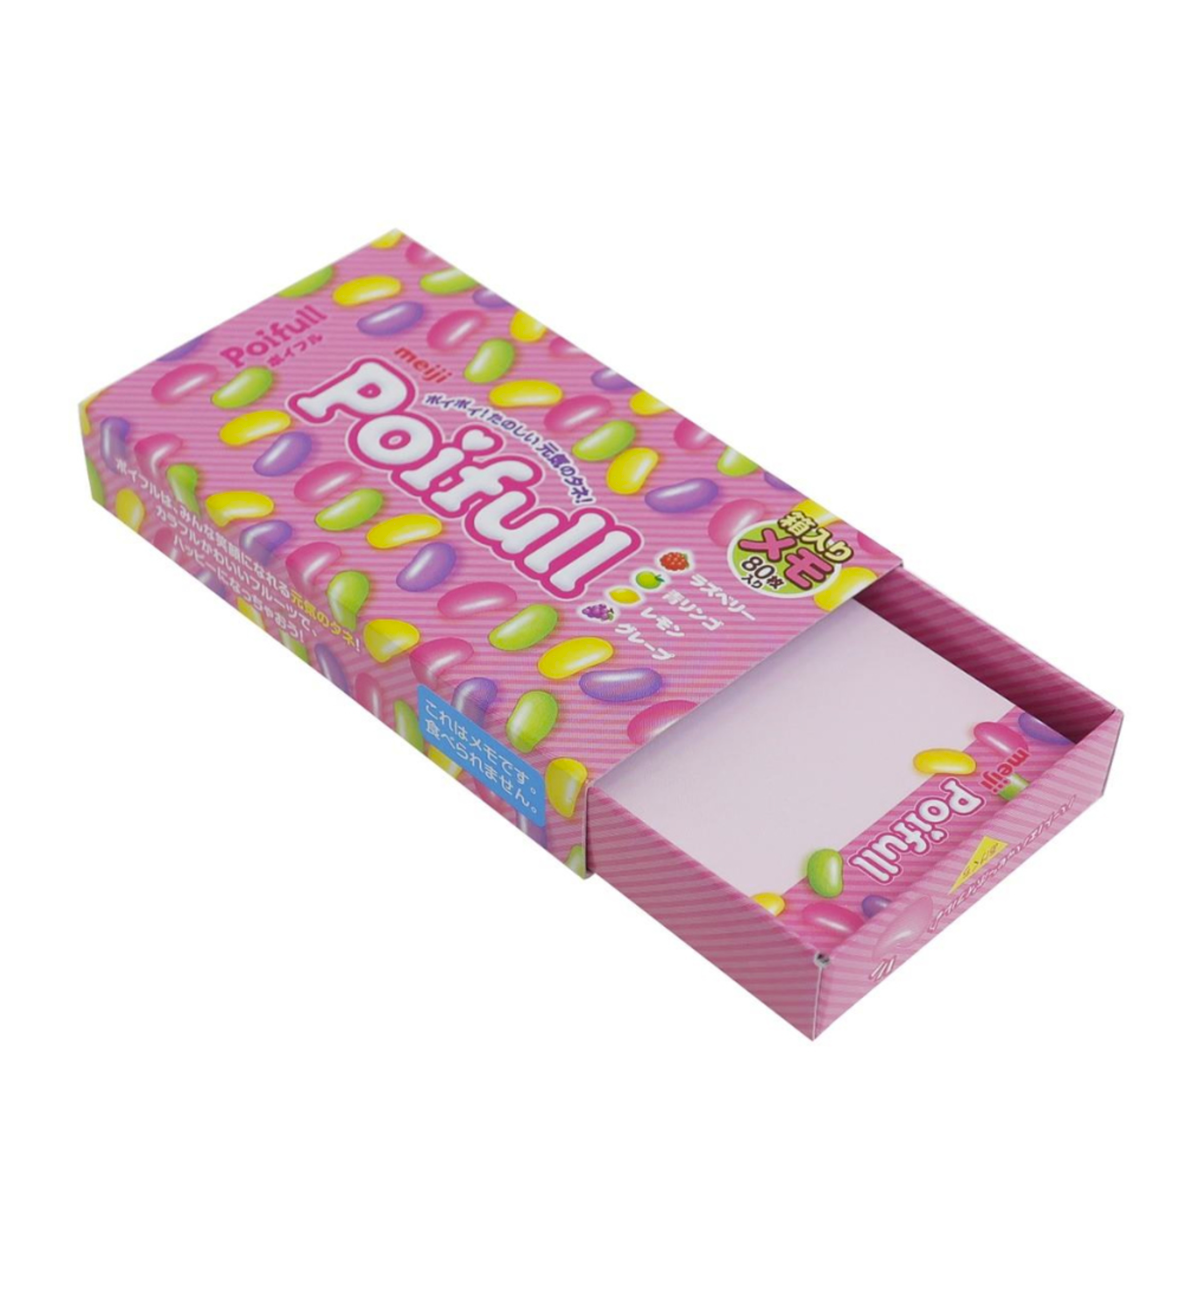 Sweets Series Box Memopad: Poifull